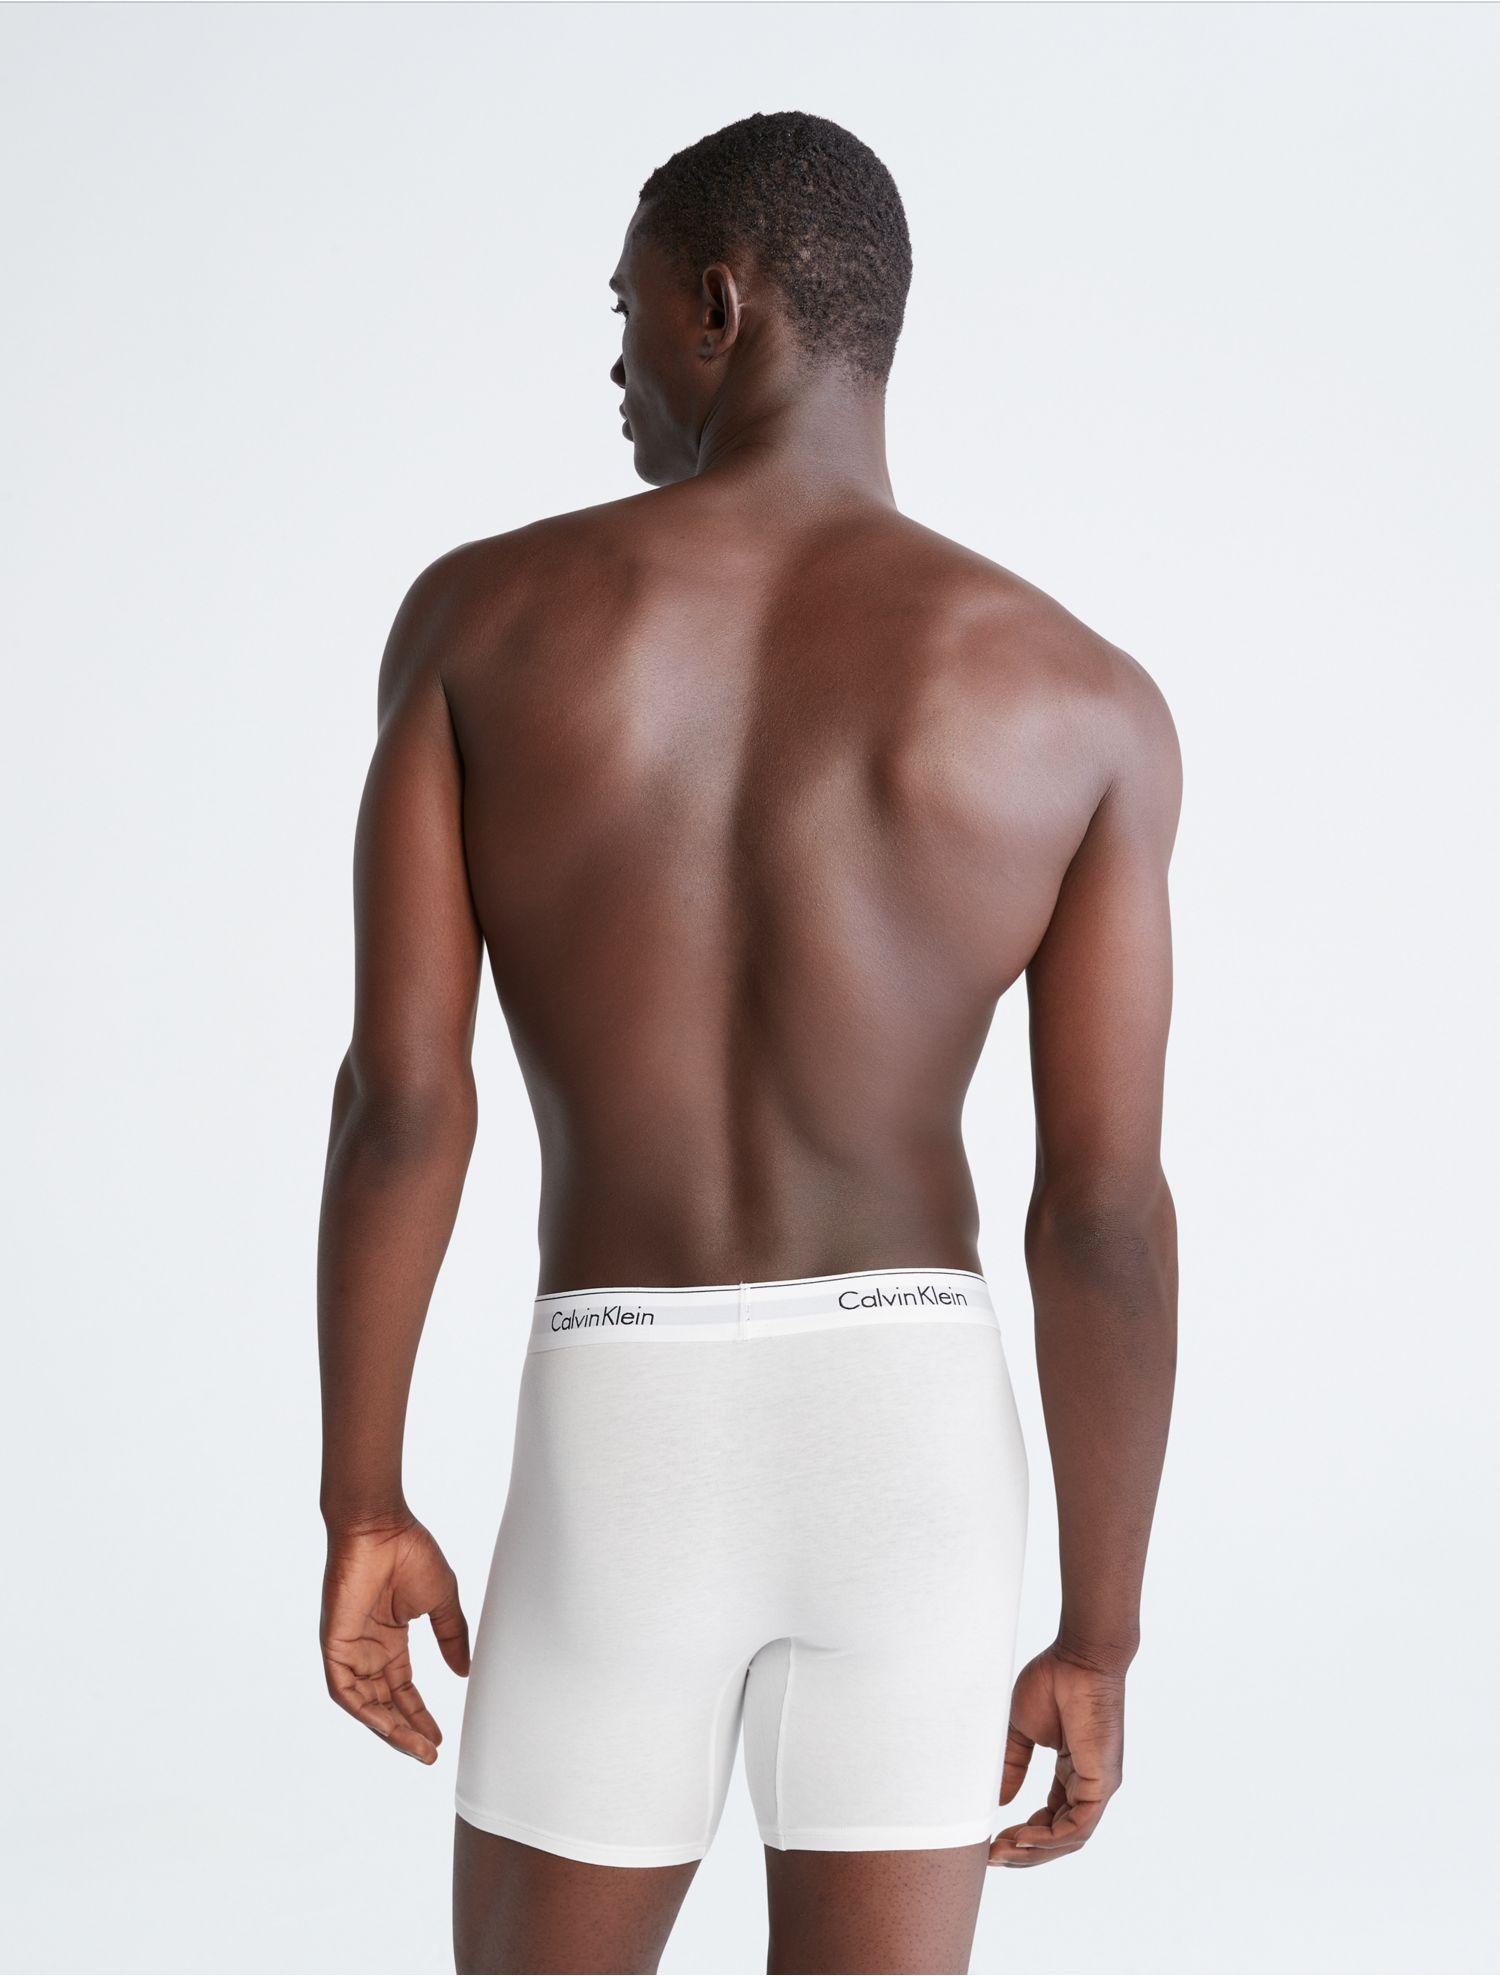 Calvin Klein Men's 3 Pack Stretch Boxer Briefs, Black, Large, Cotton